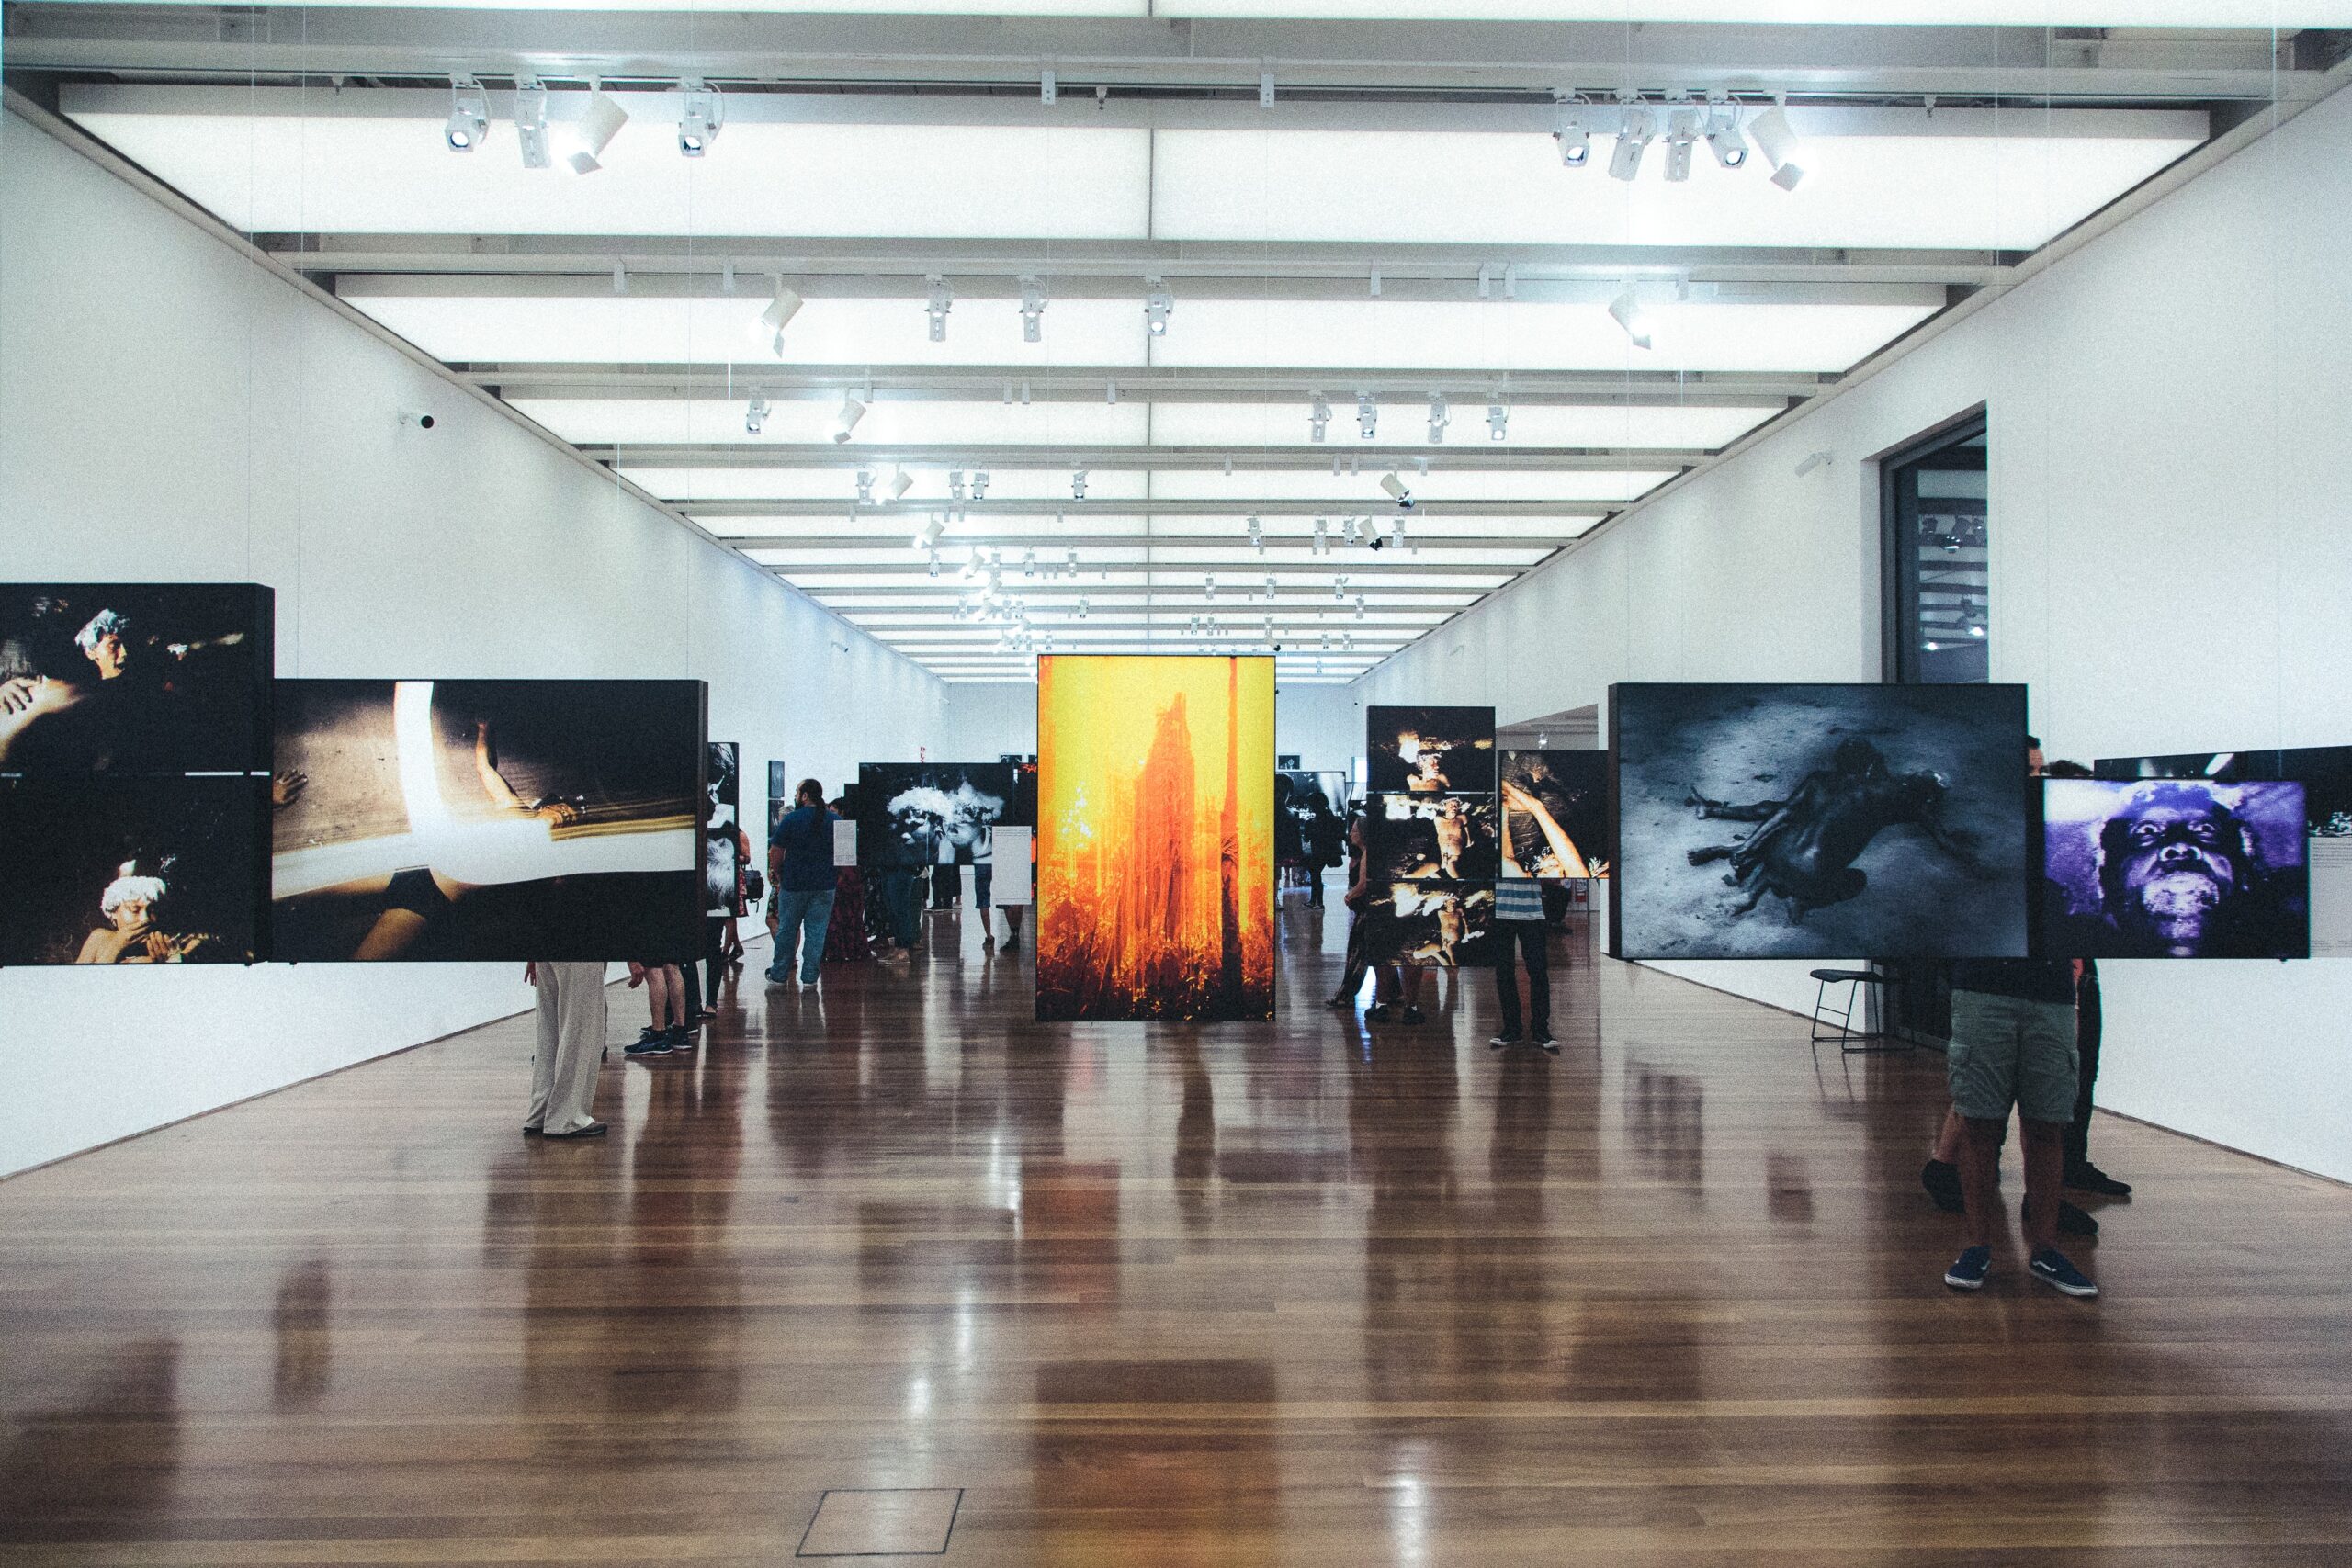 Multi-media art exhibit with large digital displays